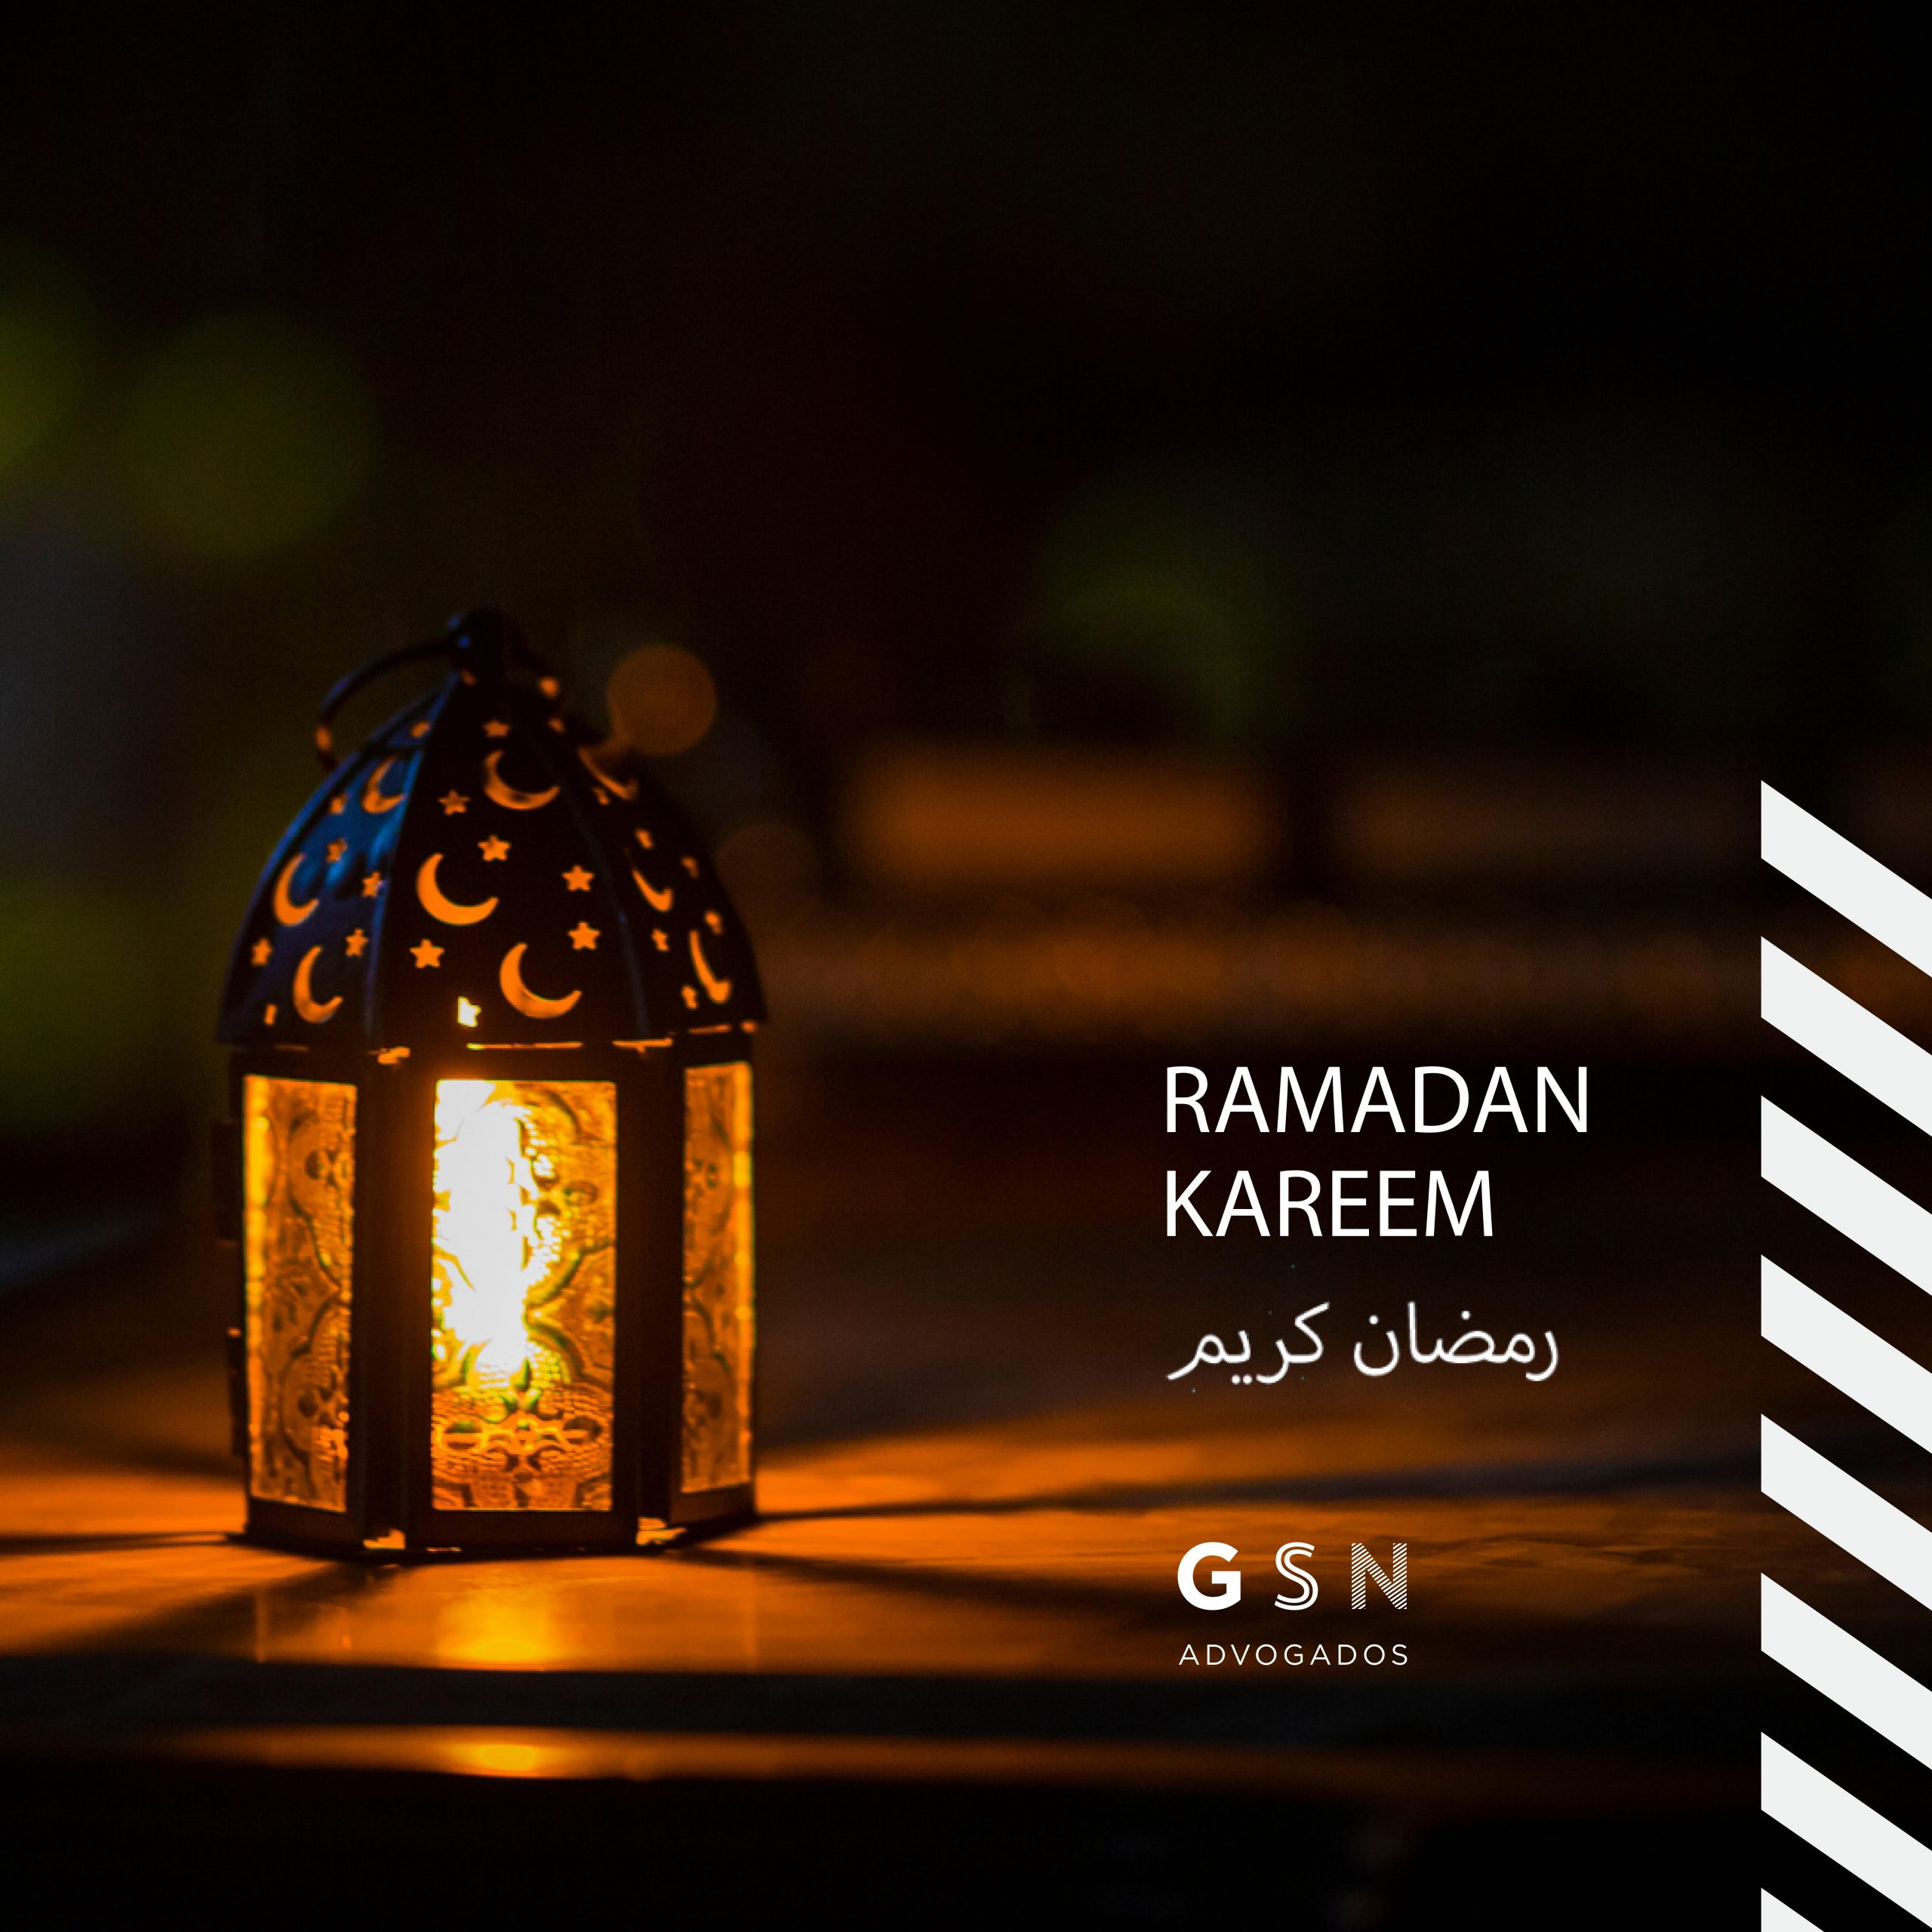 Ramadan-Kareem-GSN-Advogados-1-1-scaled.jpg